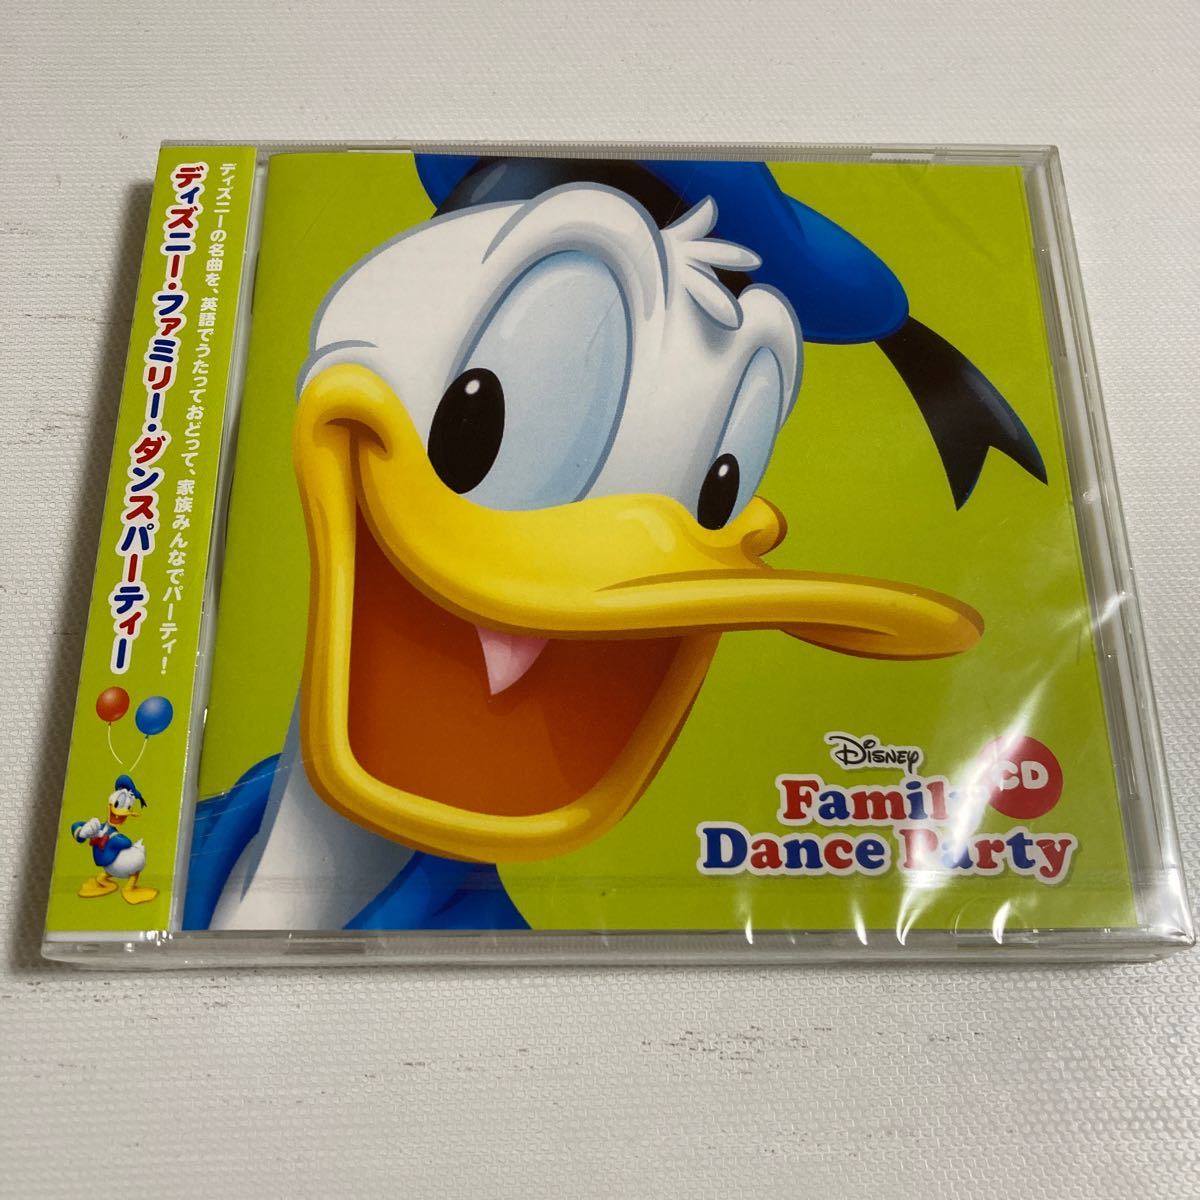 DWE Family Dance!Dance! ワールドファミリーダンス DVD - ブルーレイ